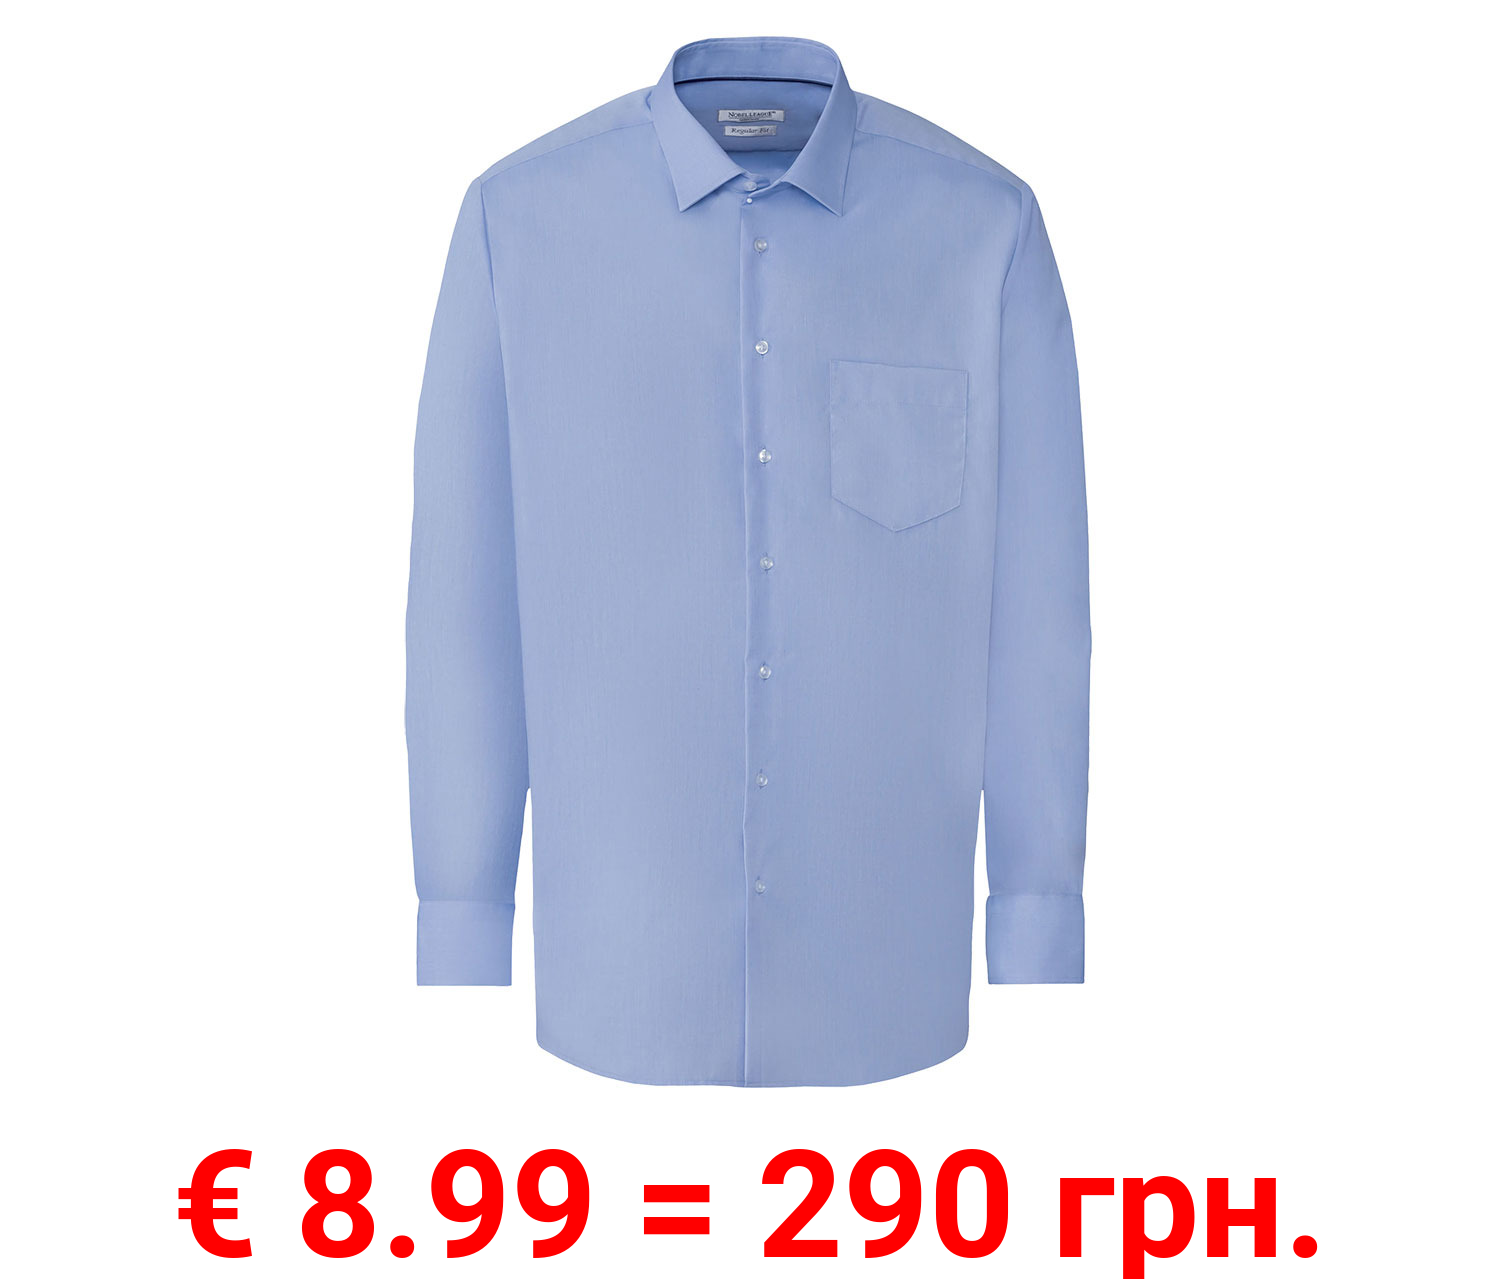 NOBEL LEAGUE® Herren Businesshemd, hellblau, aus reiner Baumwolle